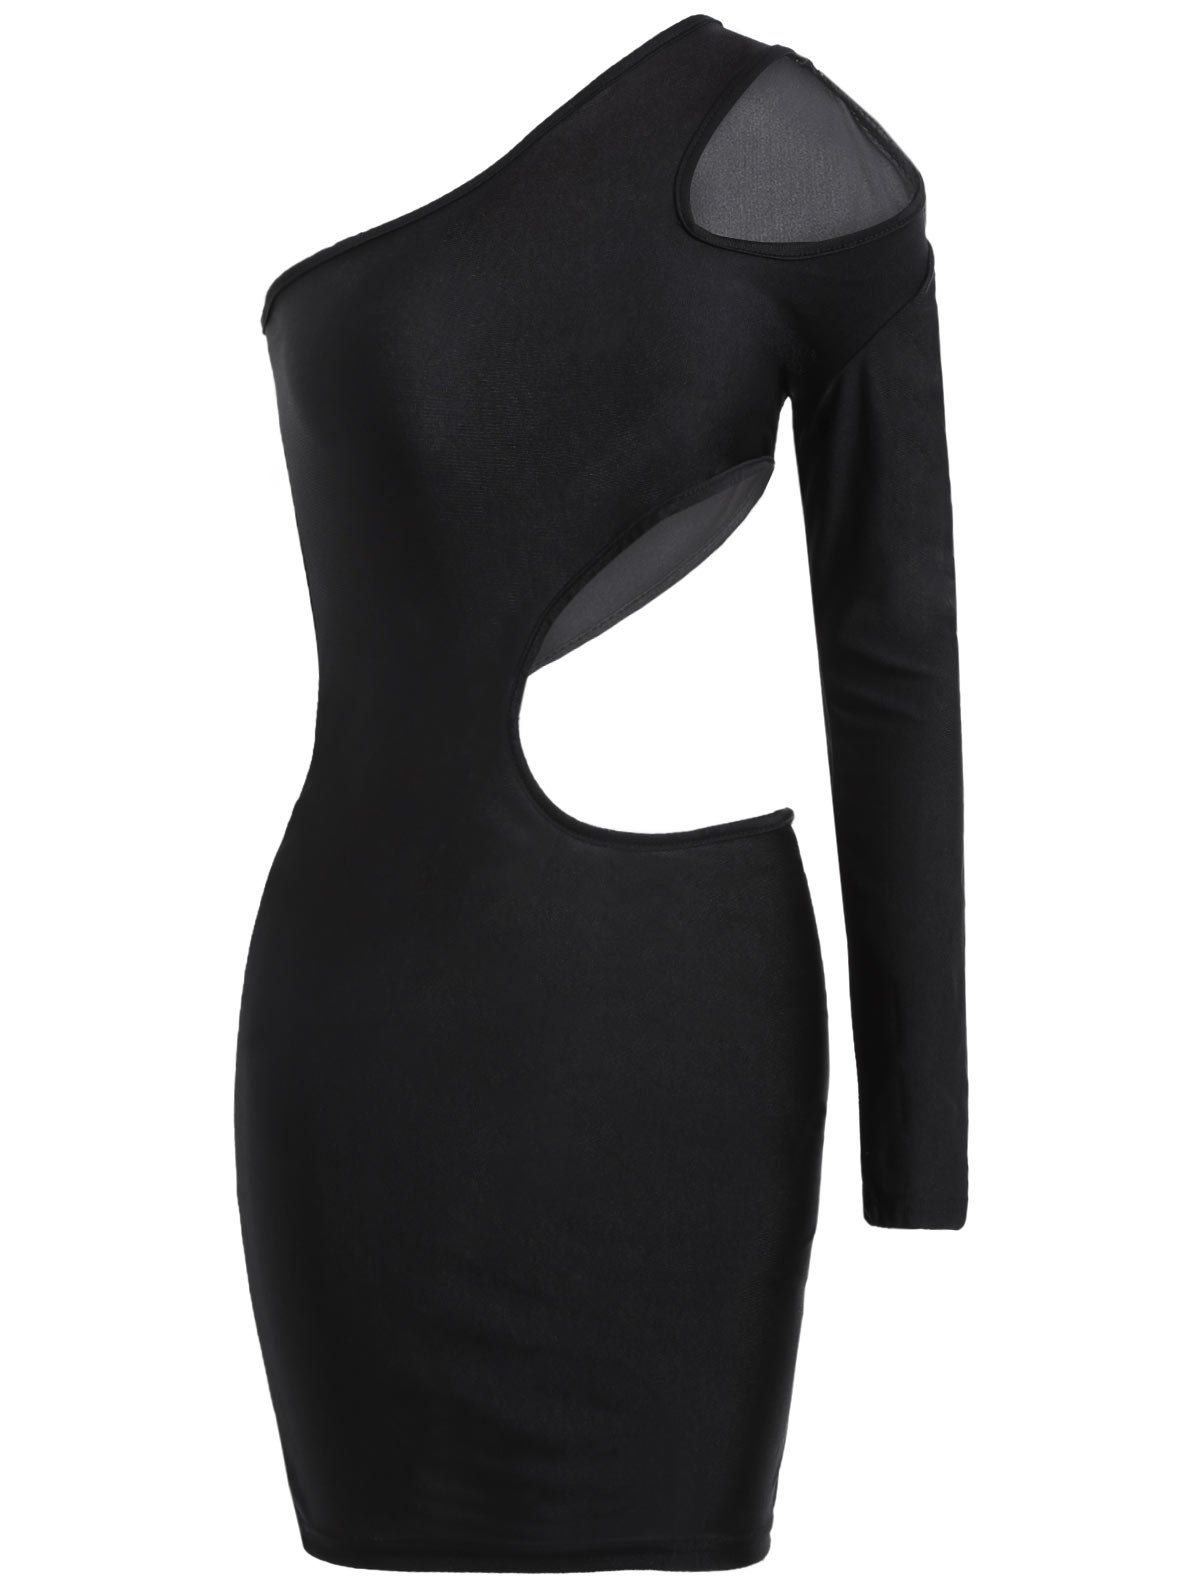 [17% OFF] 2020 One Shoulder Cut Out Bodycon Dress In BLACK | DressLily